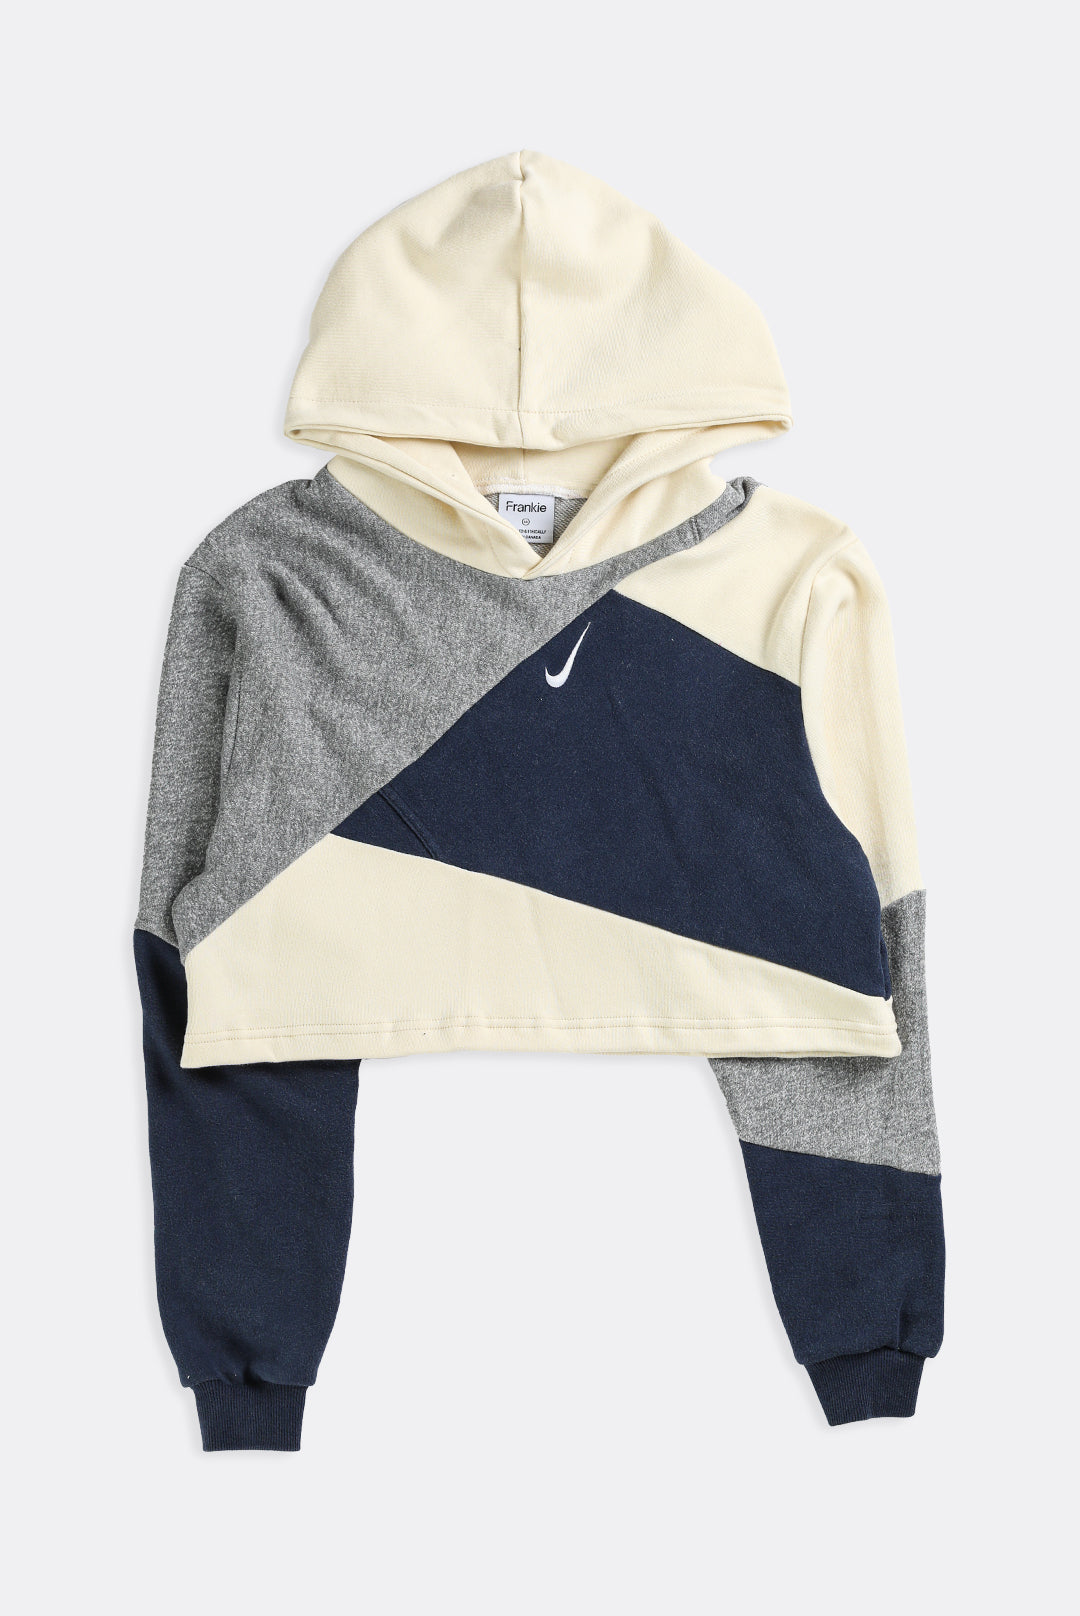 Opsommen Mentaliteit pijp Rework Nike Patchwork Crop Sweatshirt - XS – Frankie Collective